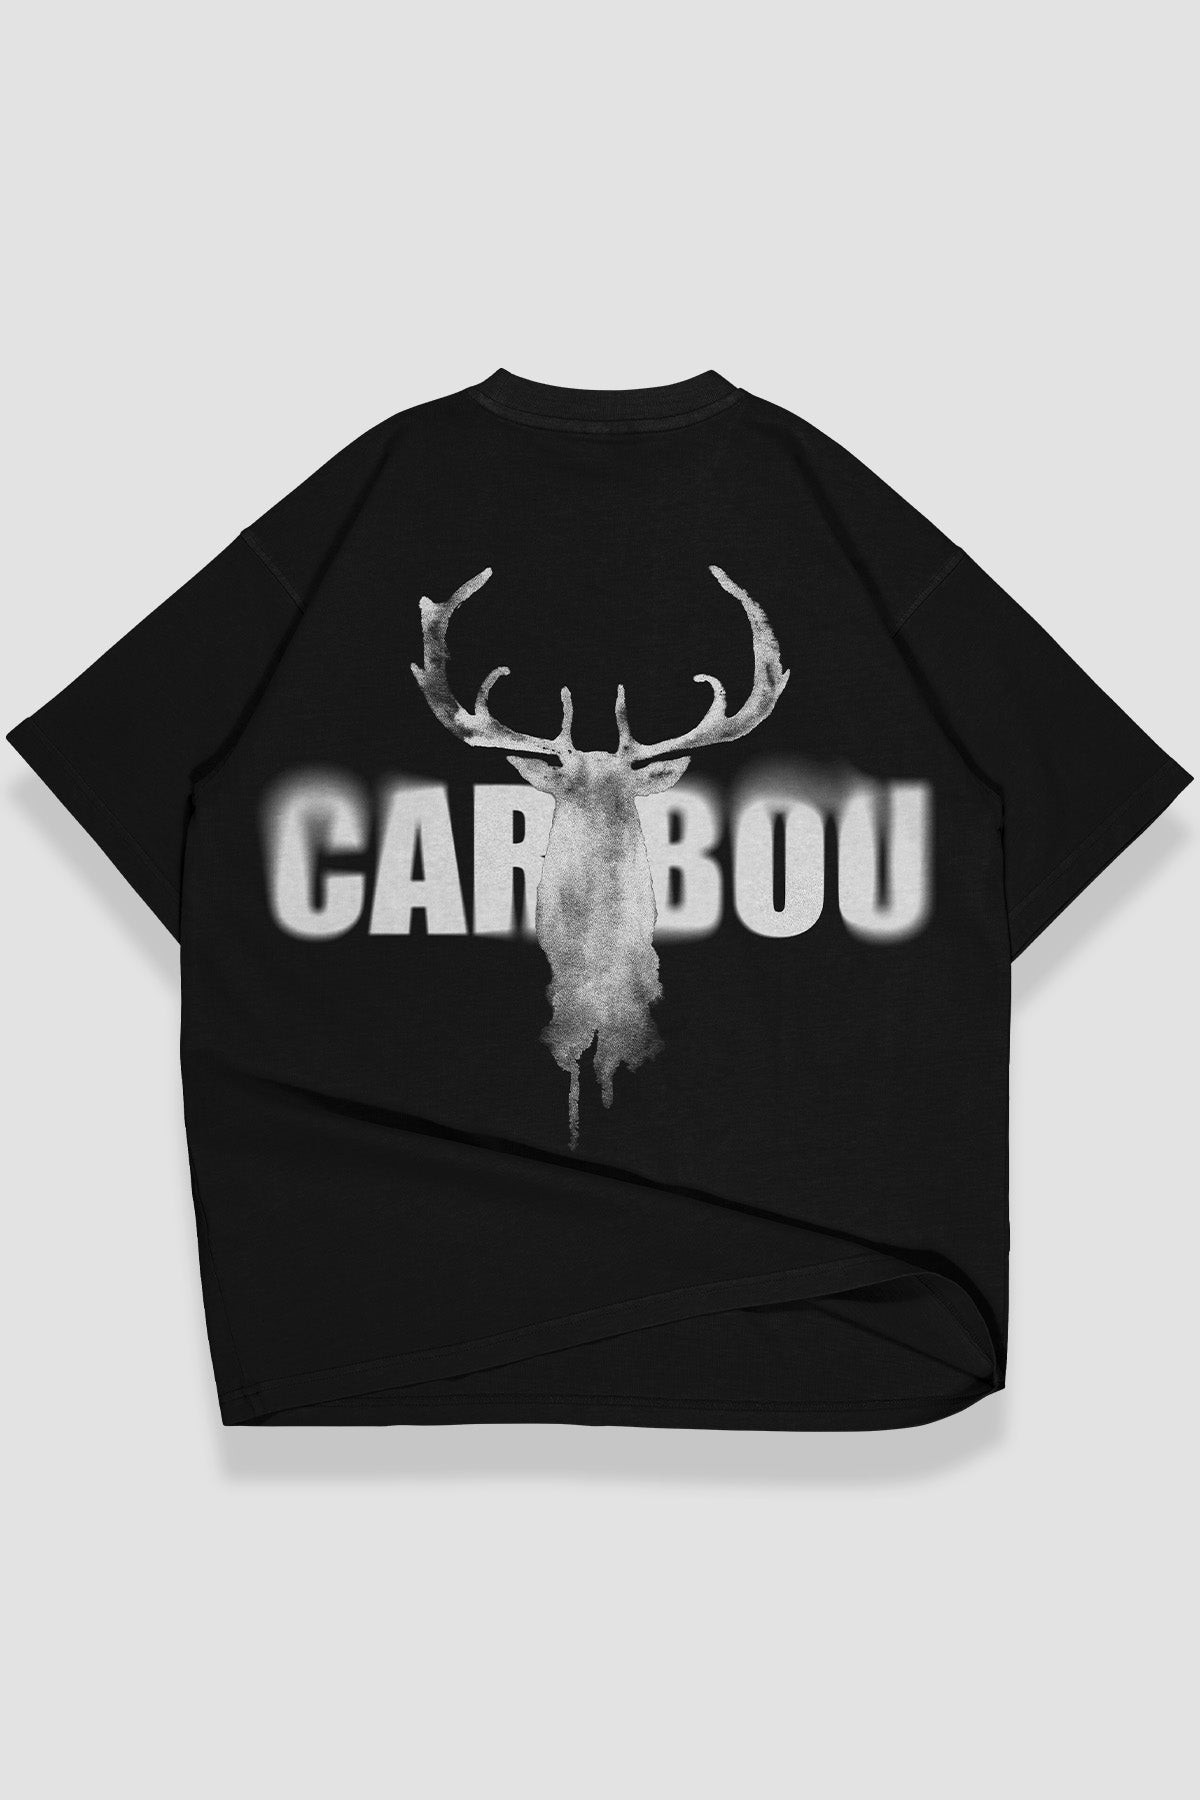 Caribou Urban Fit Oversized T-shirt - keos.life